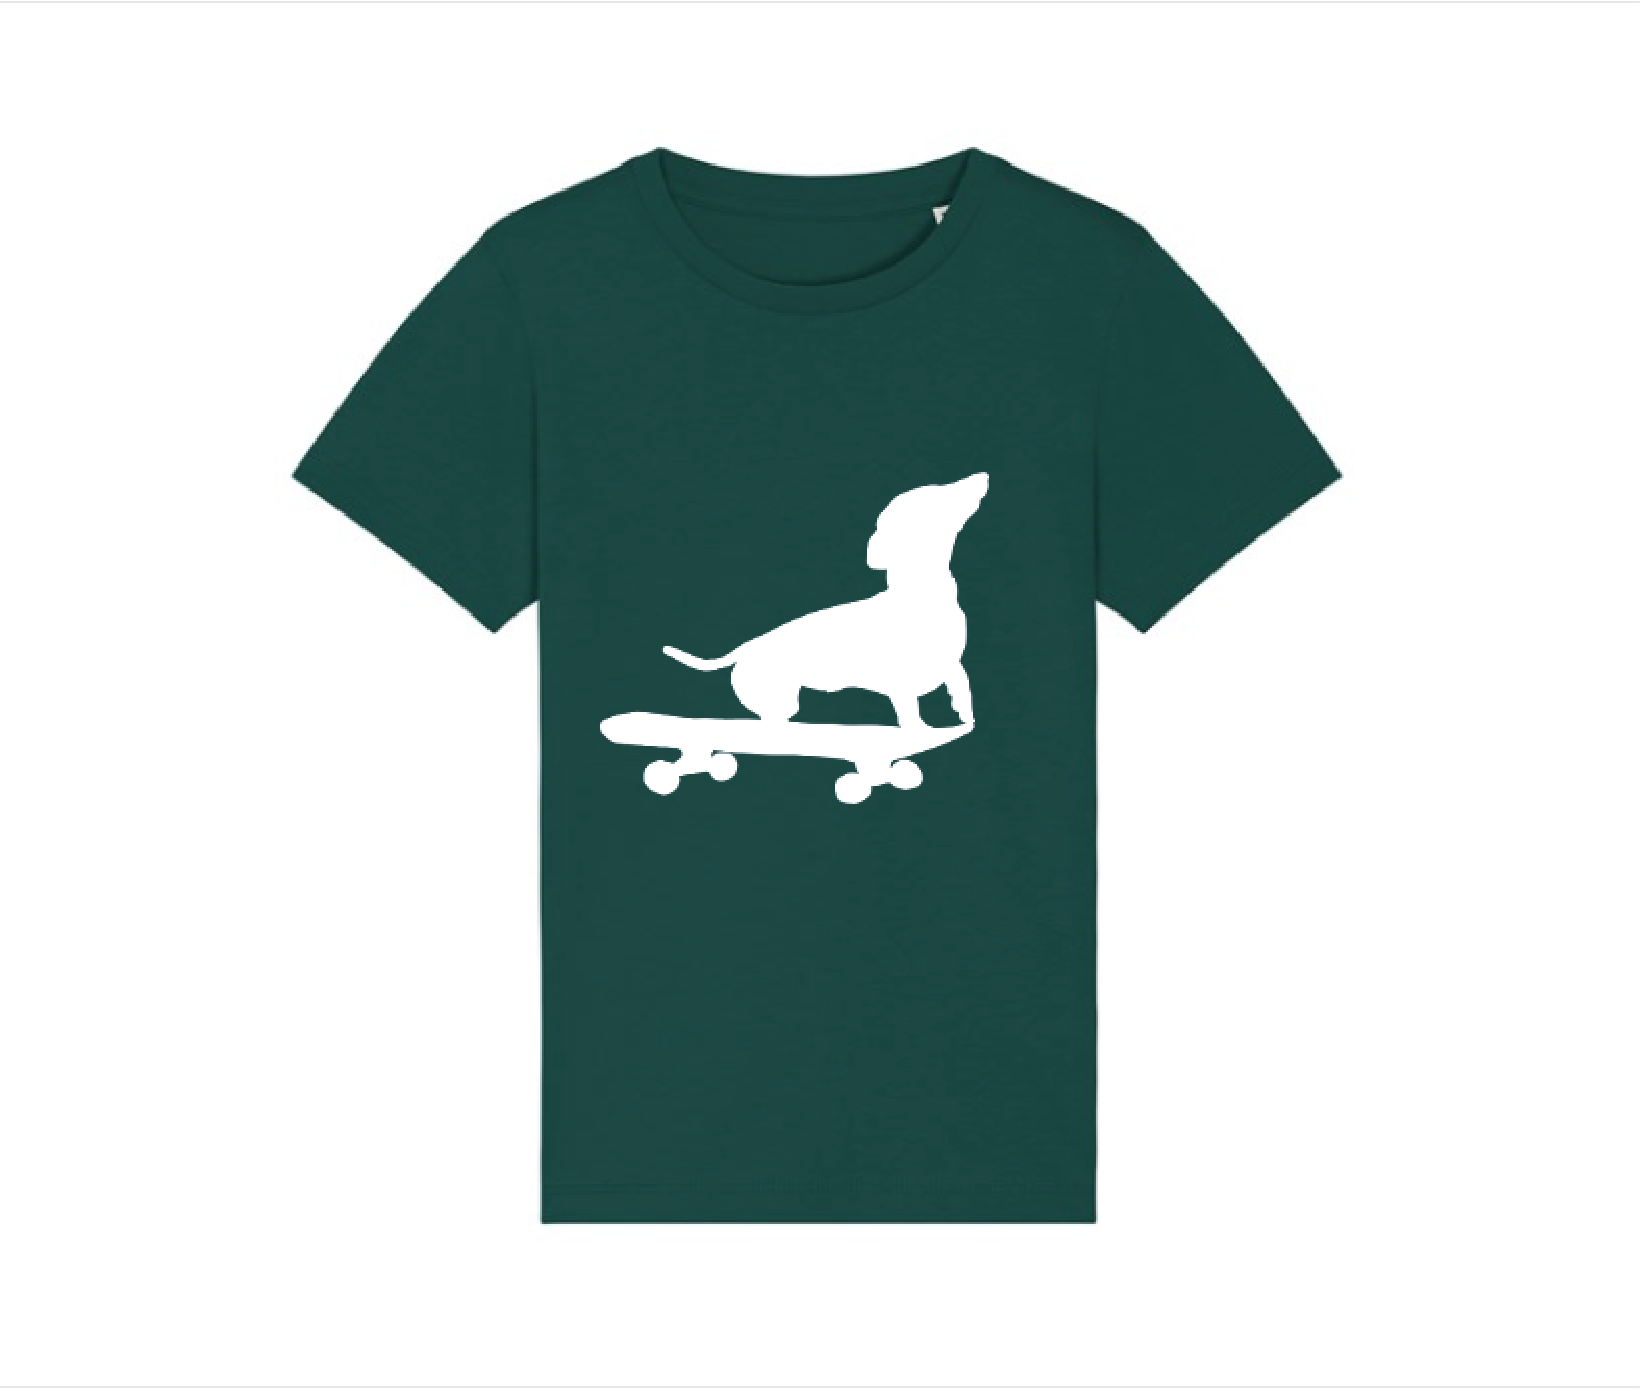 Dachshund on Skateboard T-shirt in Glazed Green